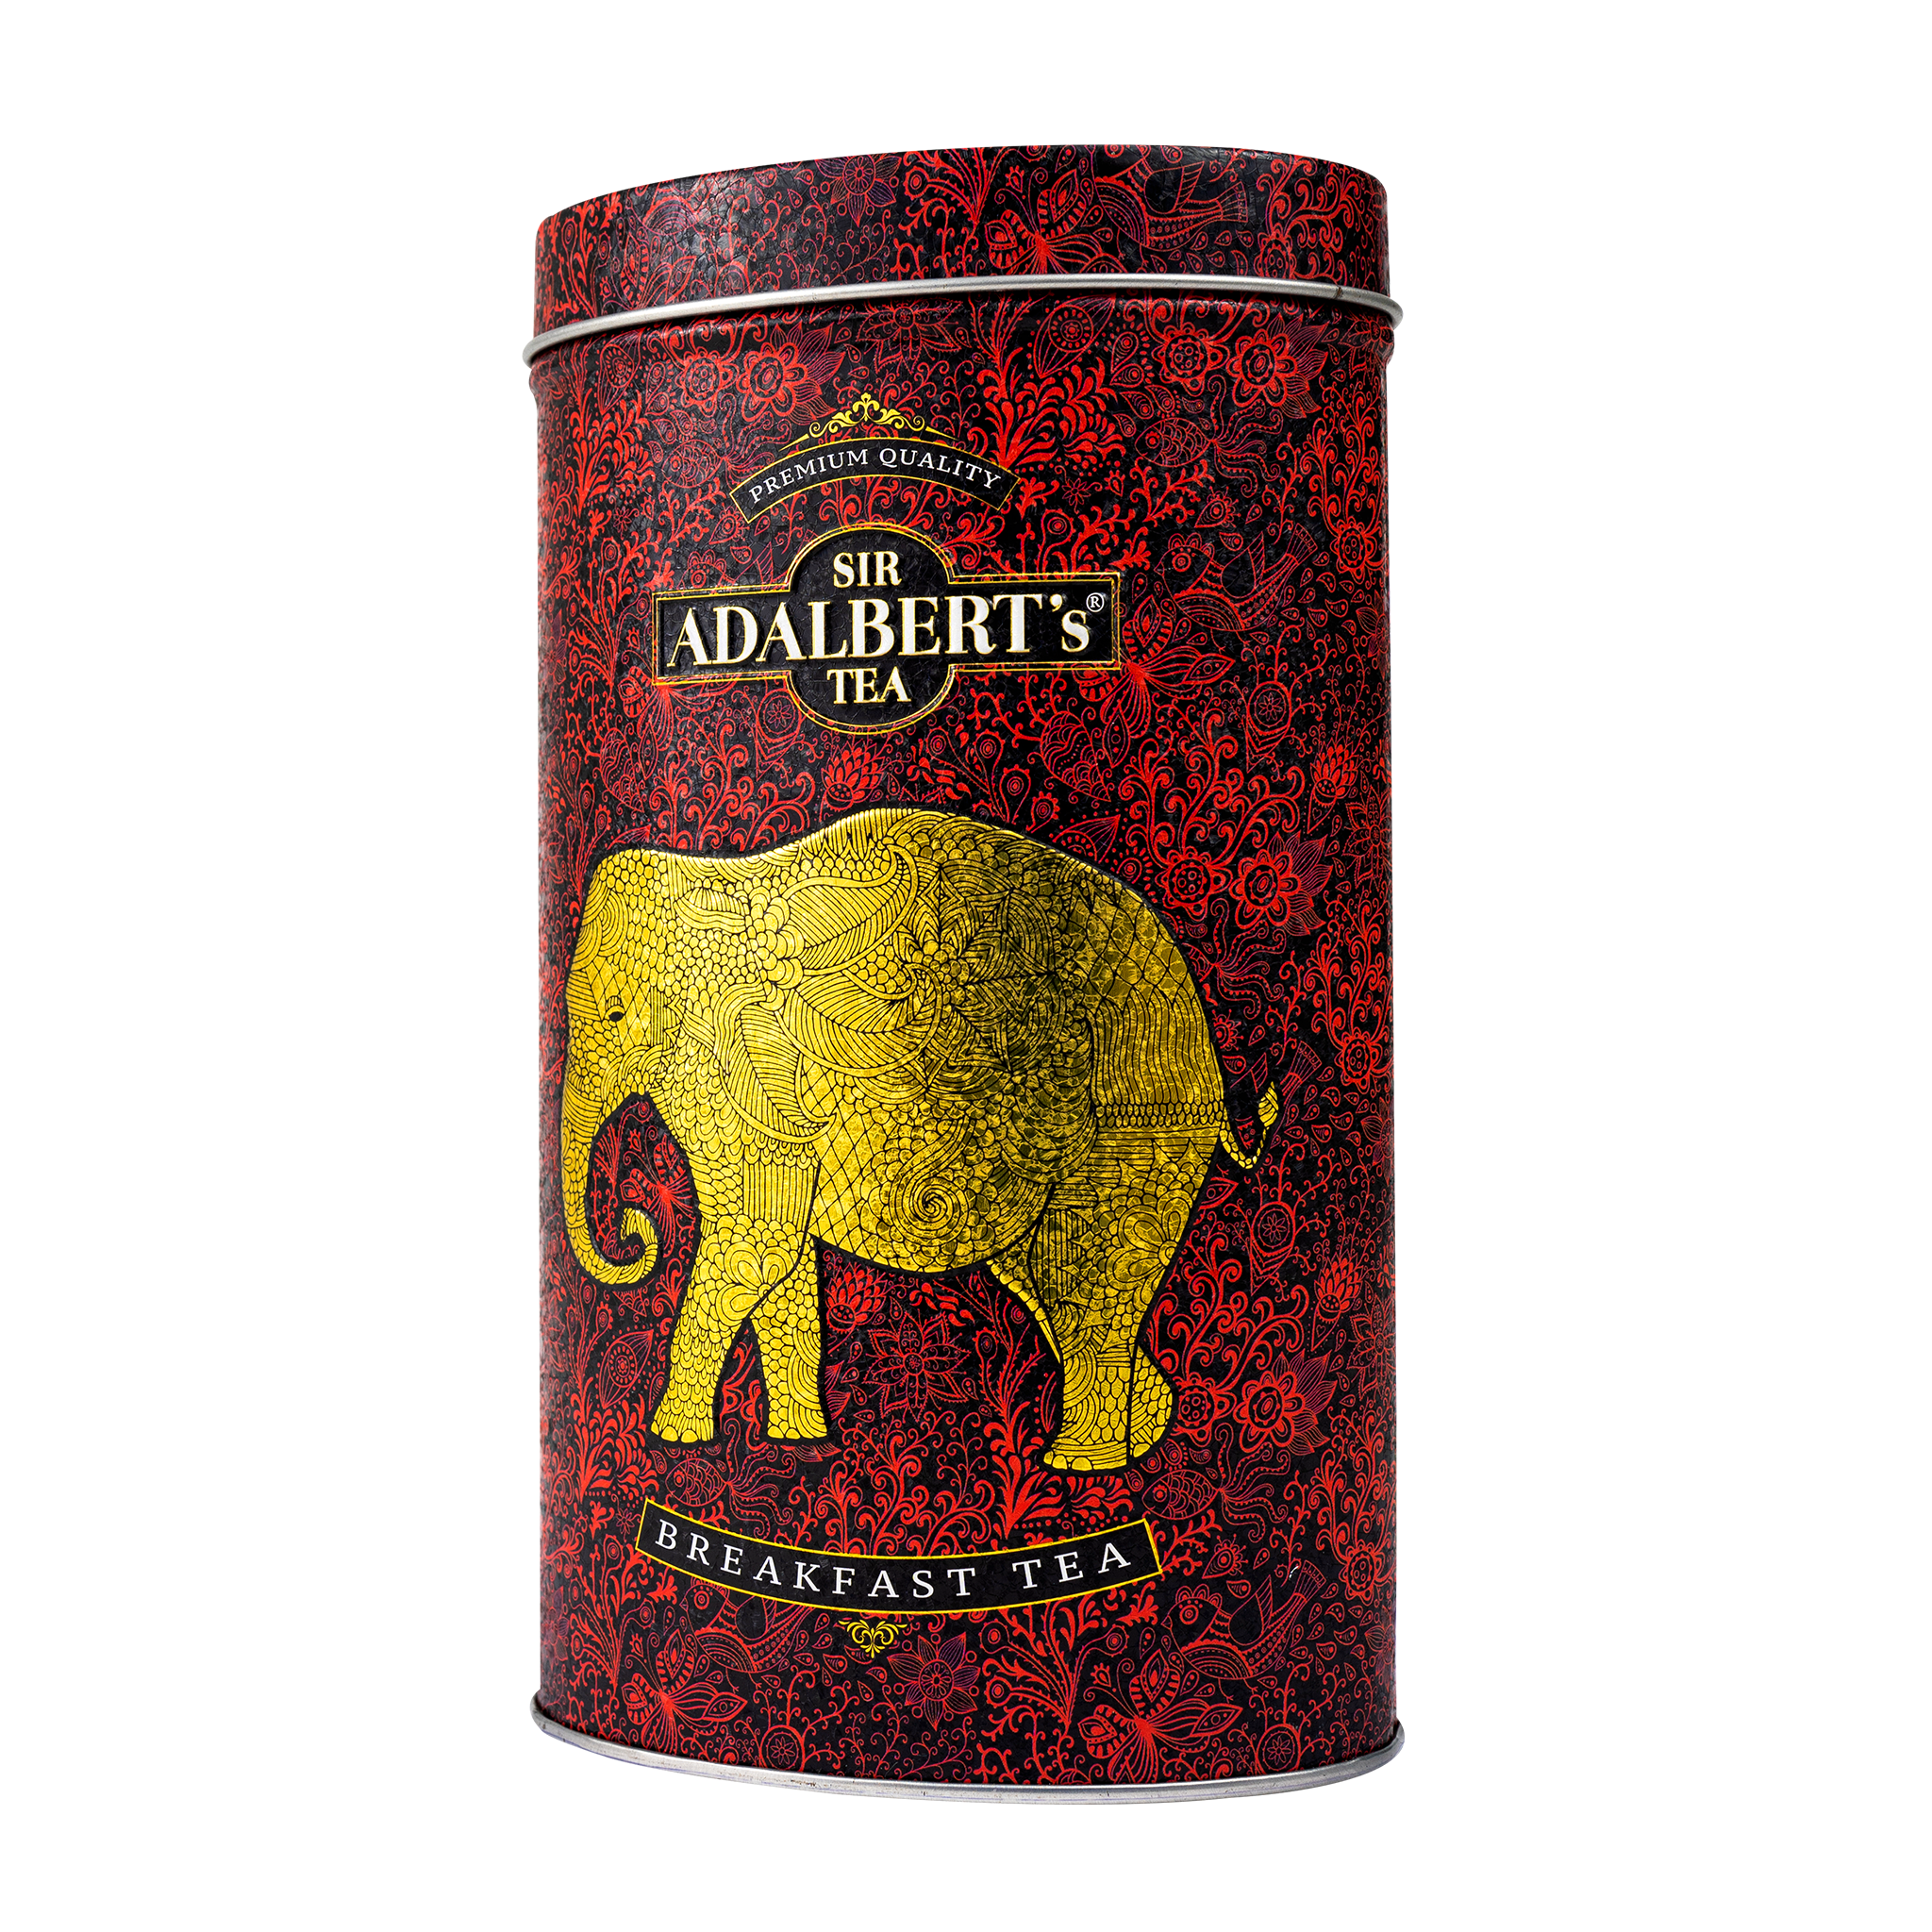 Adalbert's Tea ENGLISH BREAKFAST TEA - Leaf 110g in a can